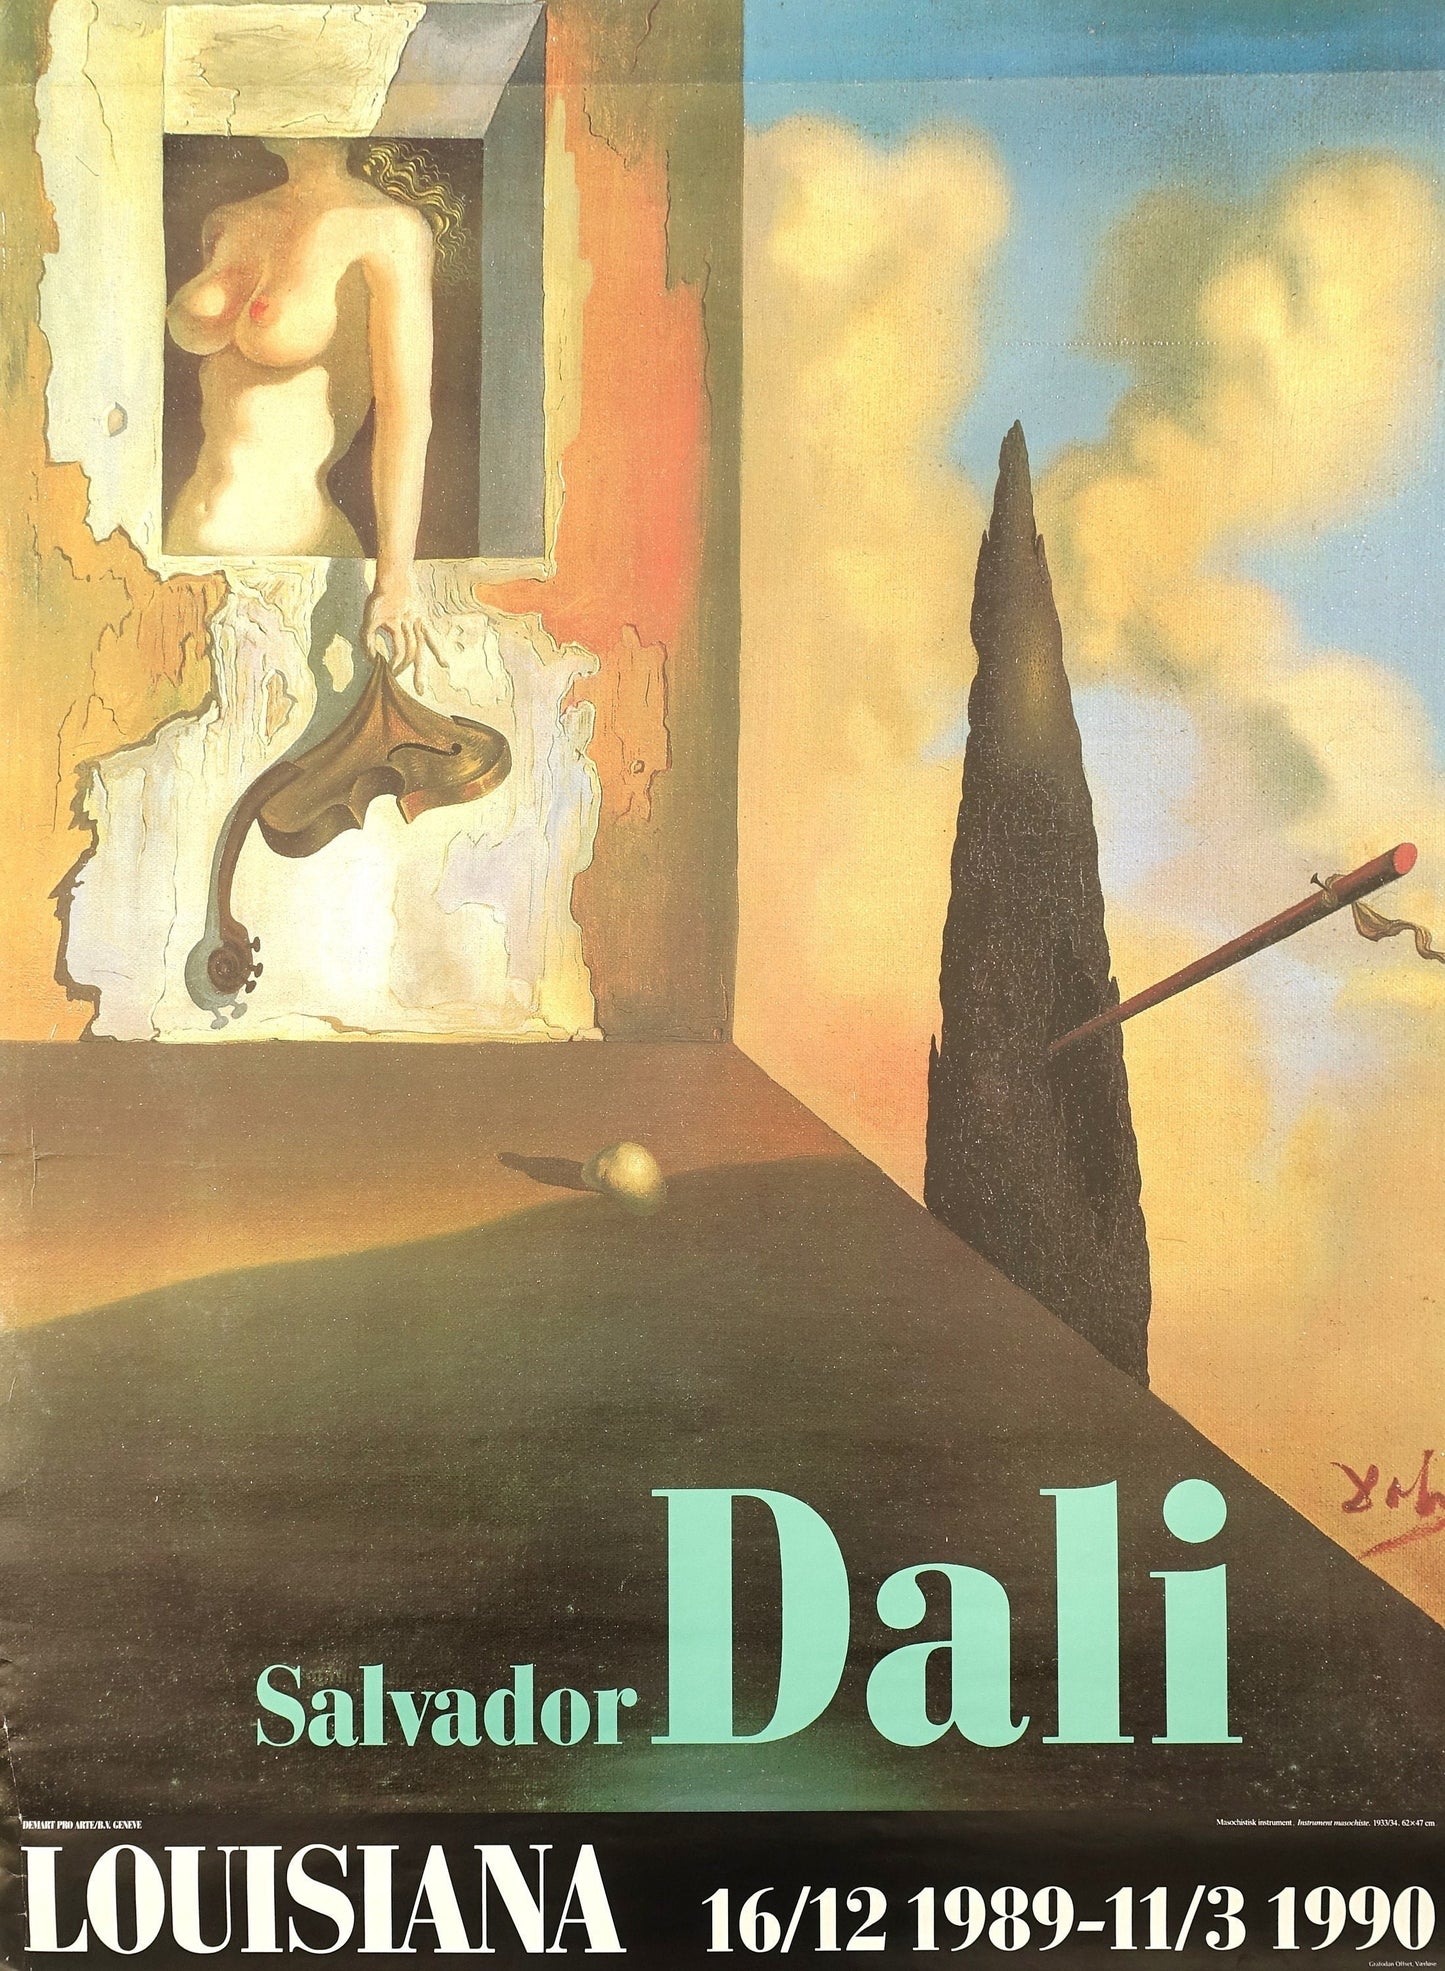 1989 Dali at Louisiana Museum of Modern Art - Original Vintage Poster